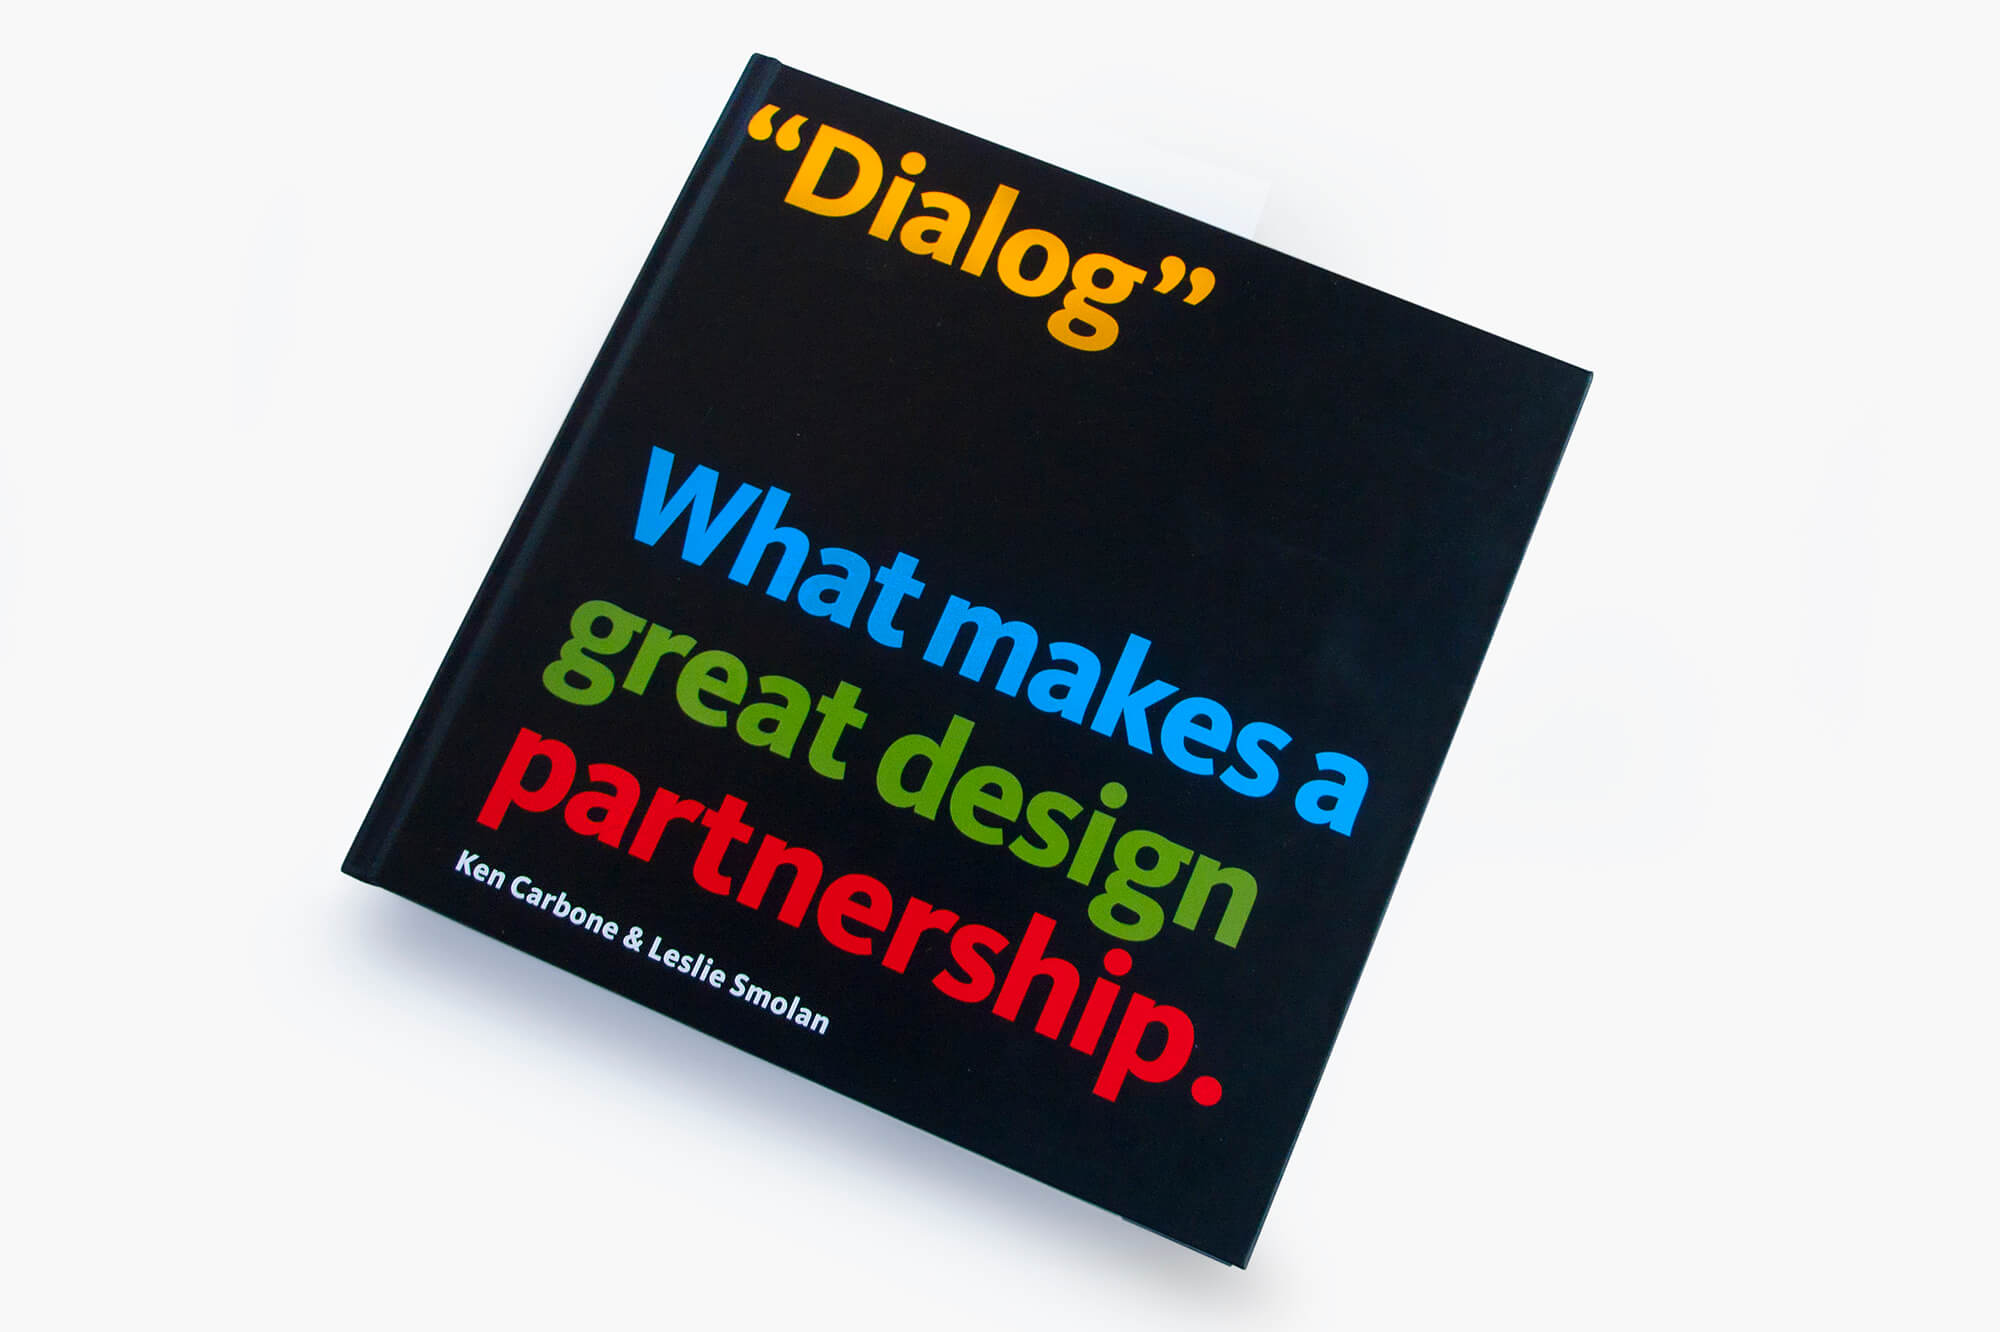 Dialog. What makes a great design partnership. Ken Carbone, Leslie Smolan